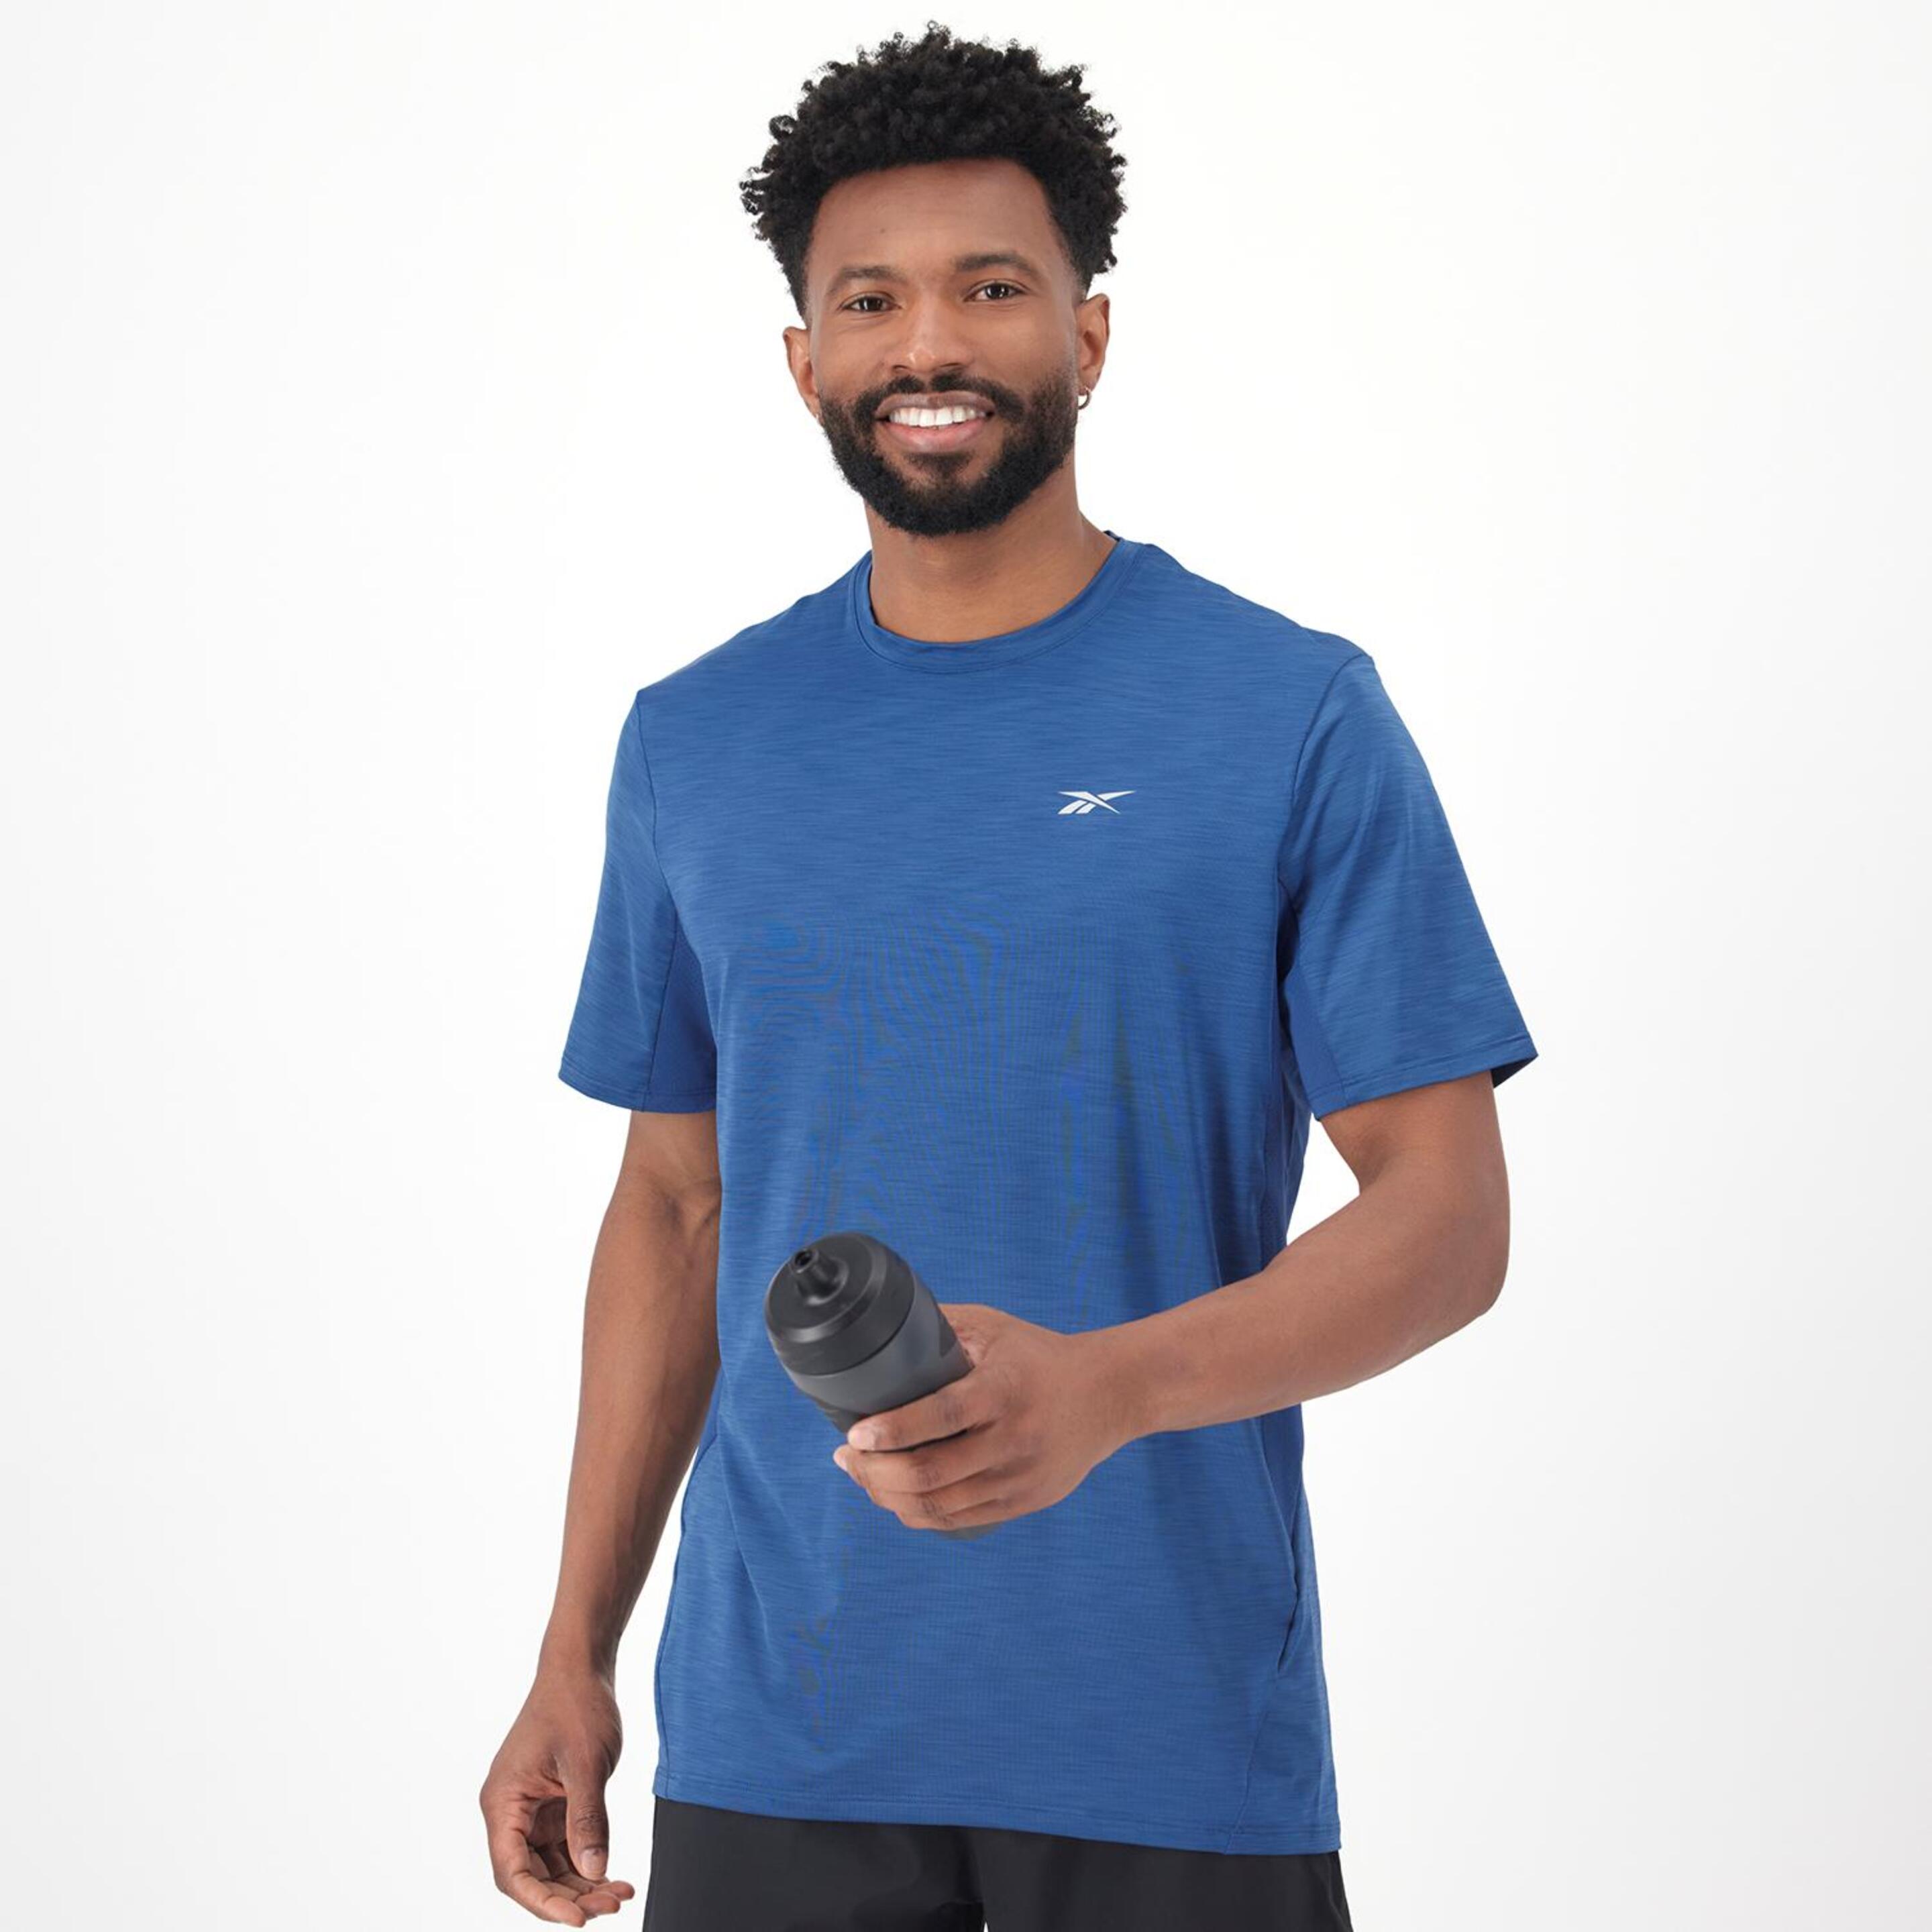 Reebok Athlete 2.0 Chill - azul - Camiseta Running Hombre